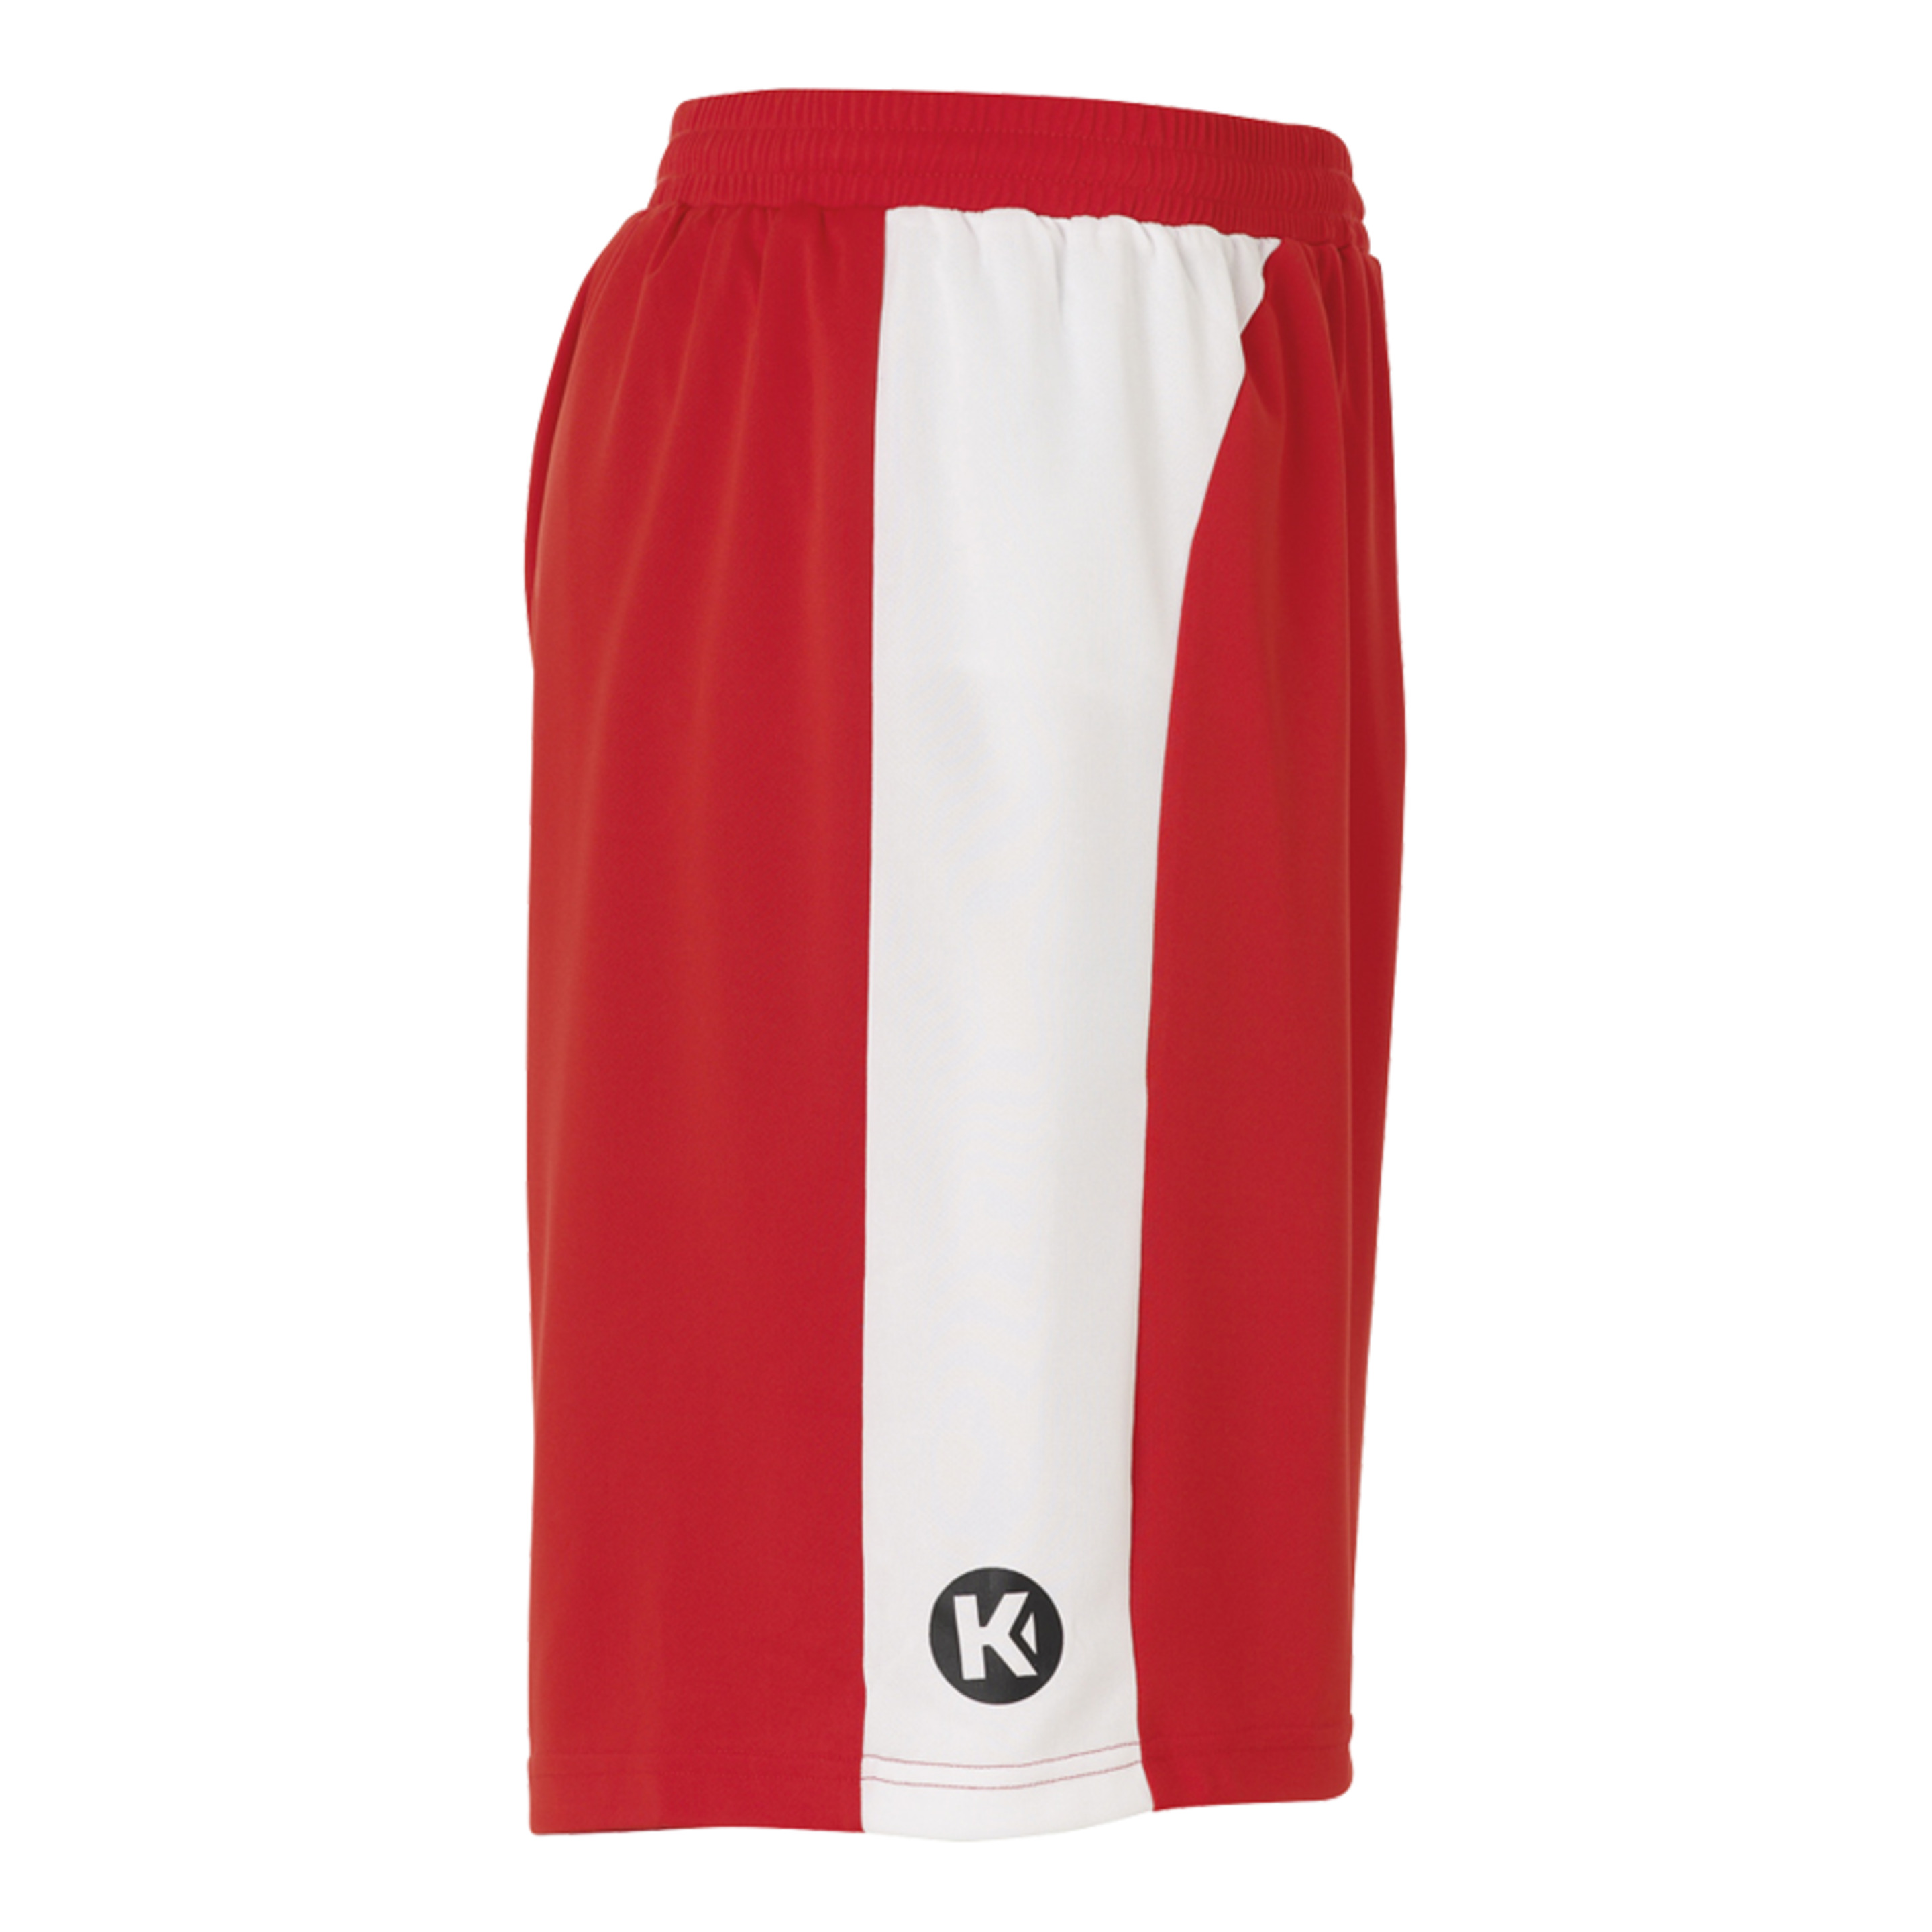 Peak Shorts Rojo/blanco Kempa - rojo - Peak Shorts Rojo/blanco Kempa  MKP